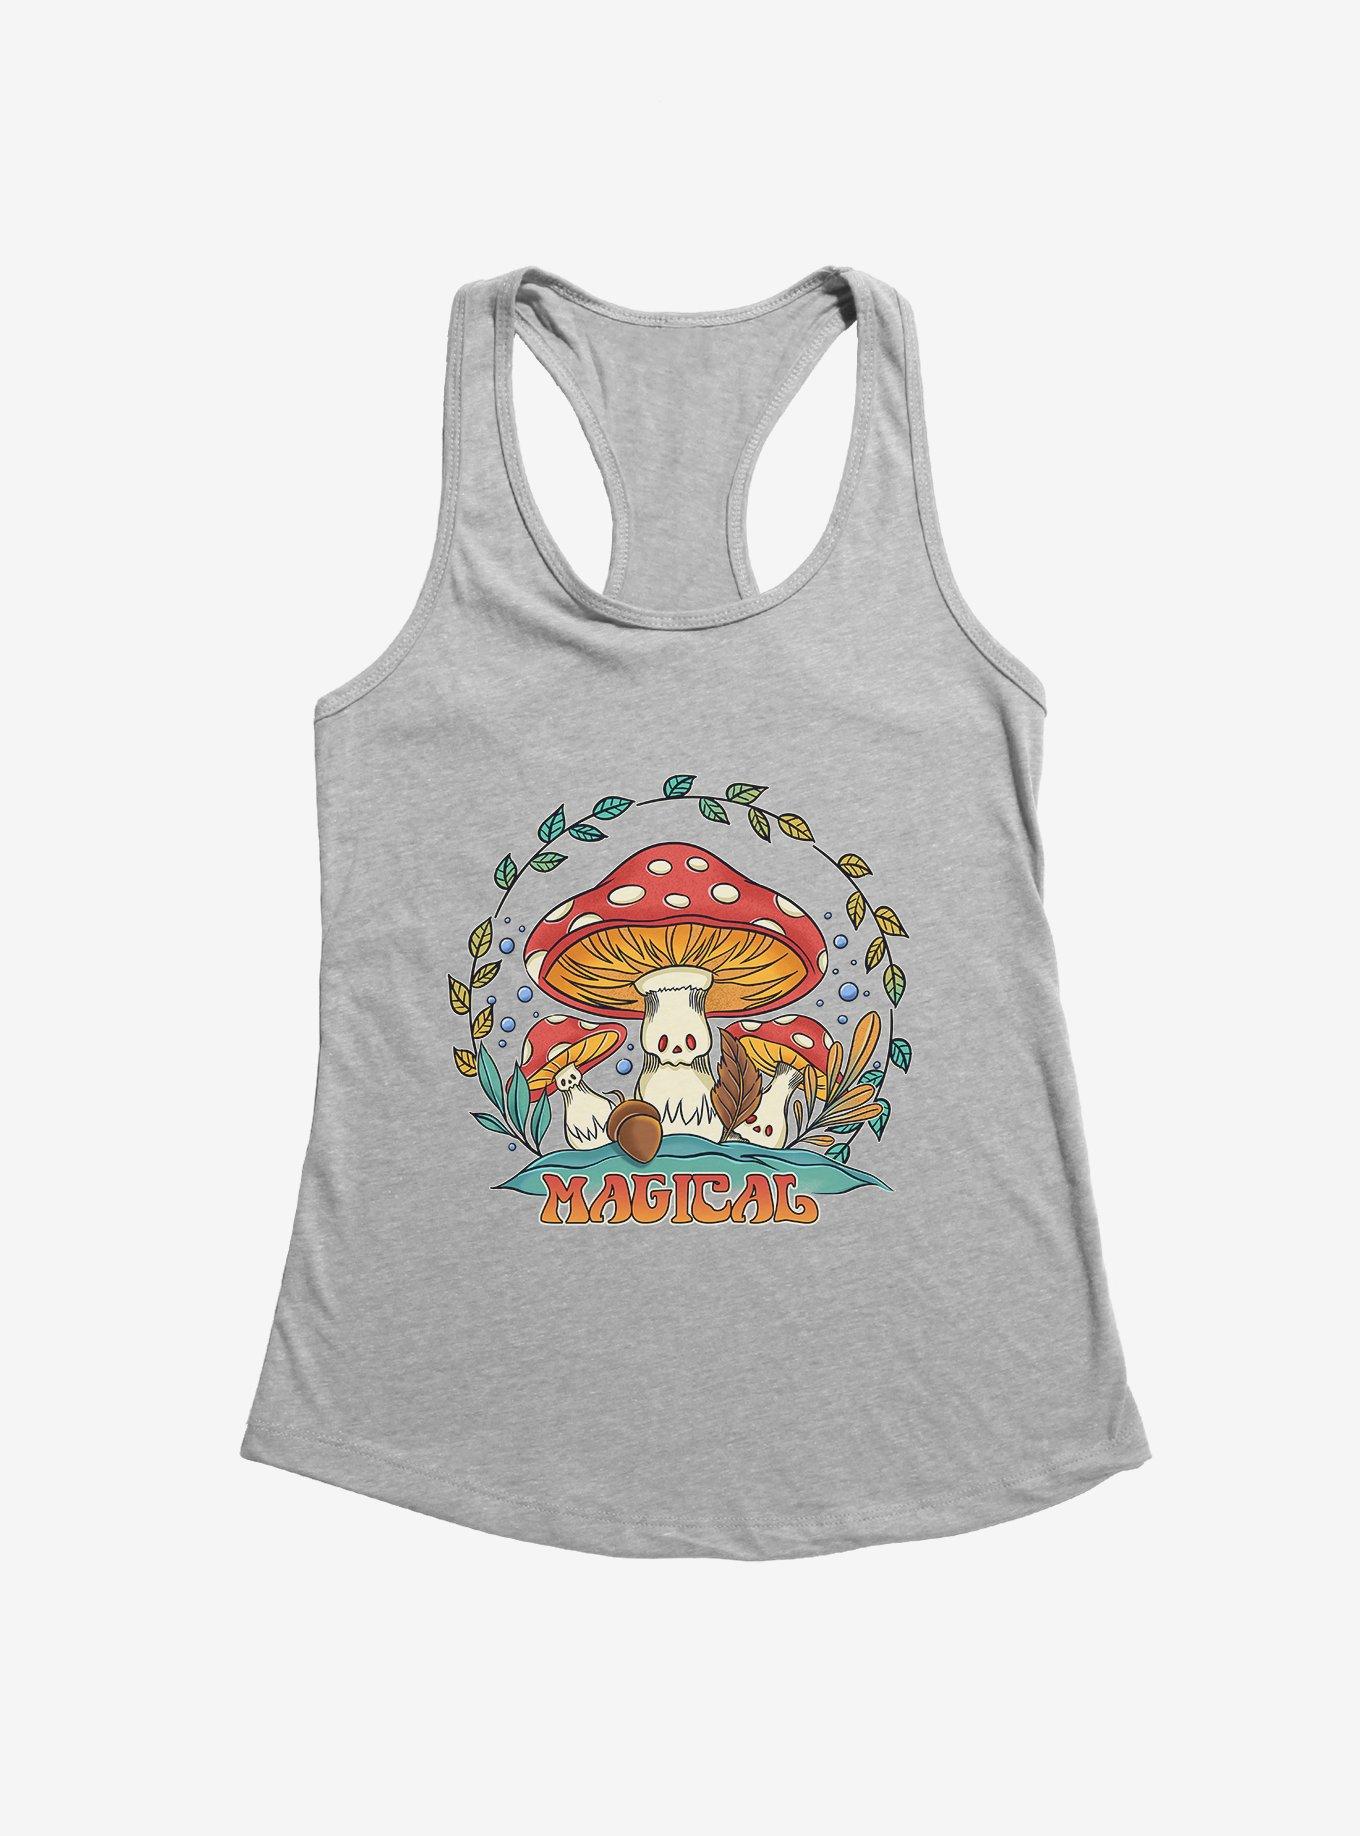 Magical Mushrooms Girls Tank